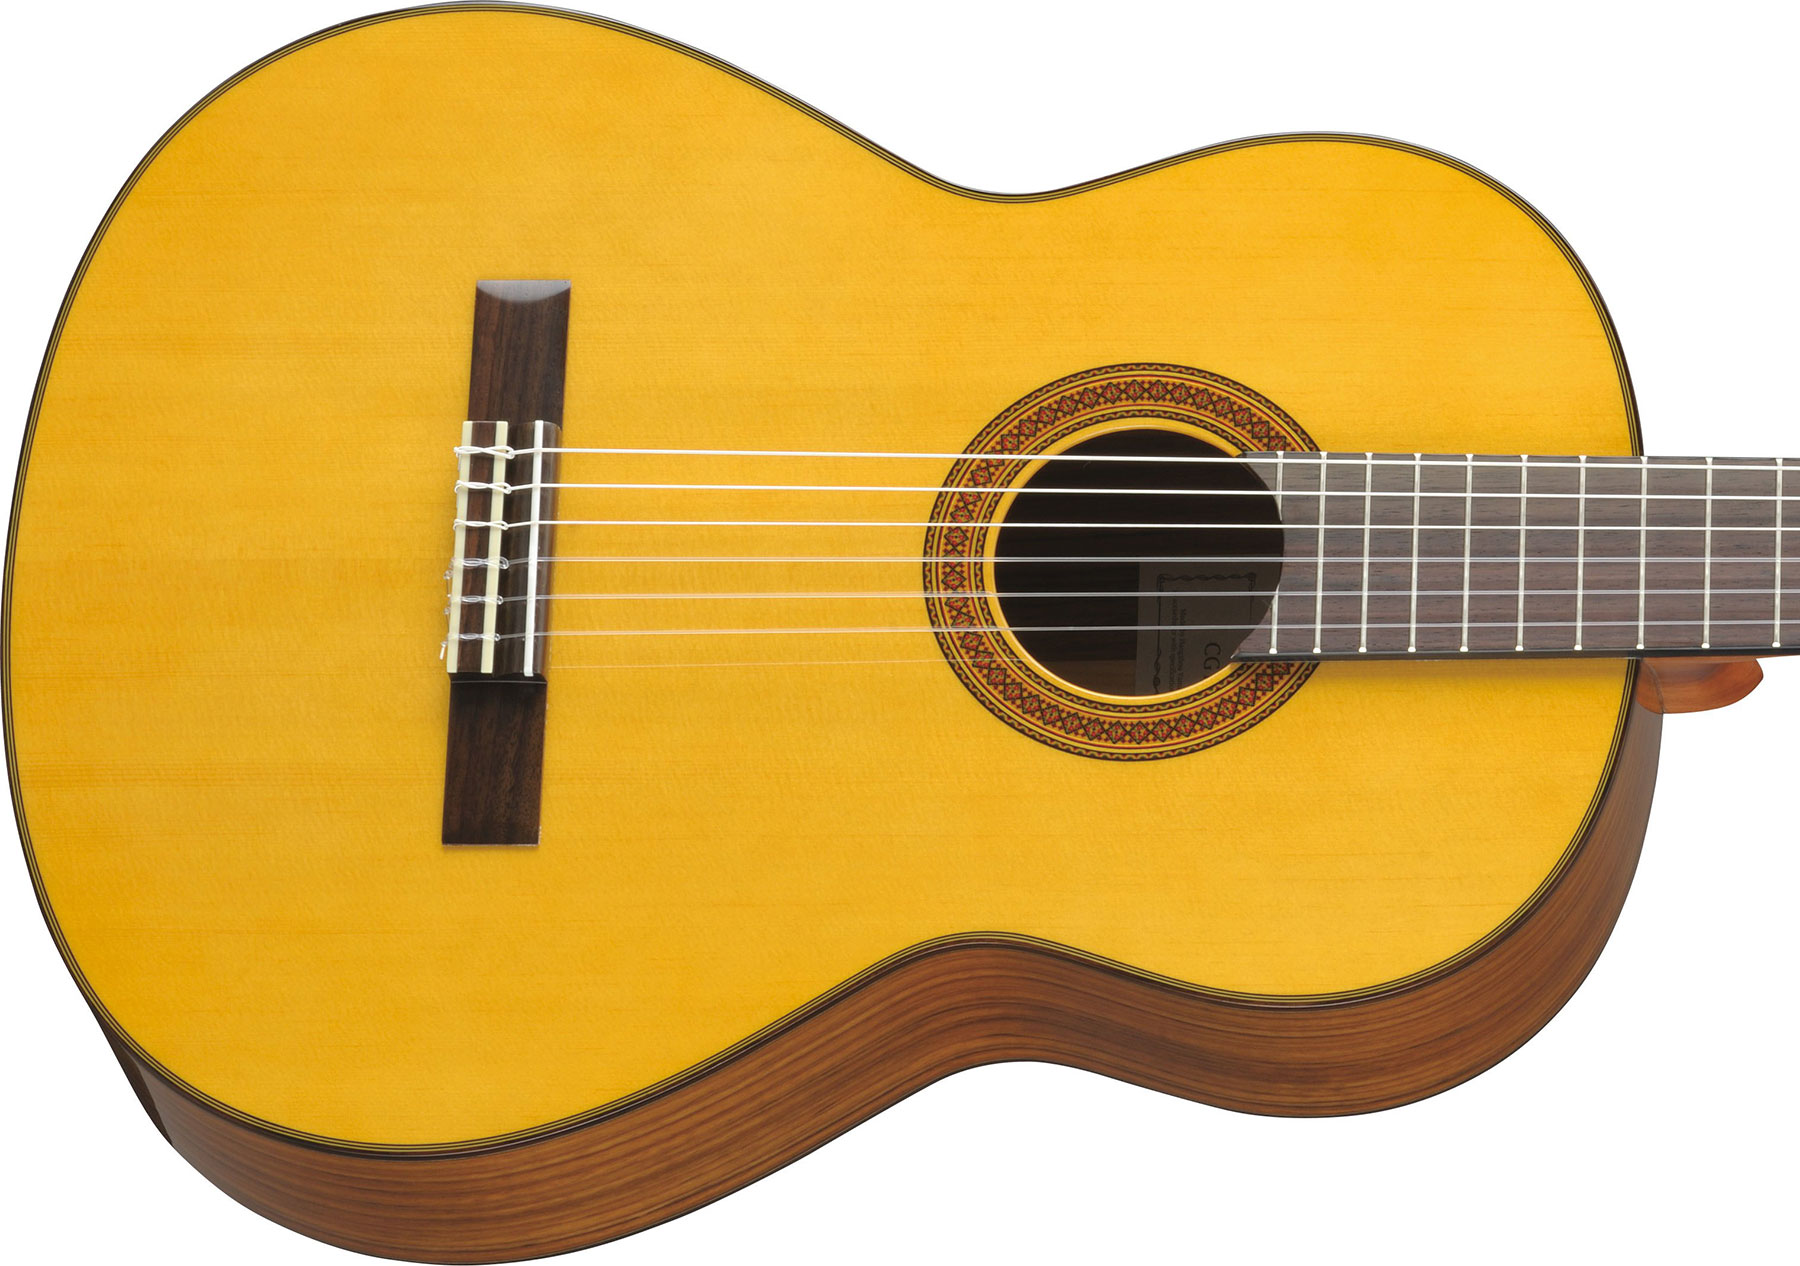 Yamaha Cg162s 4/4 Epicea Ovangkol Rw - Natural - Classical guitar 4/4 size - Variation 2